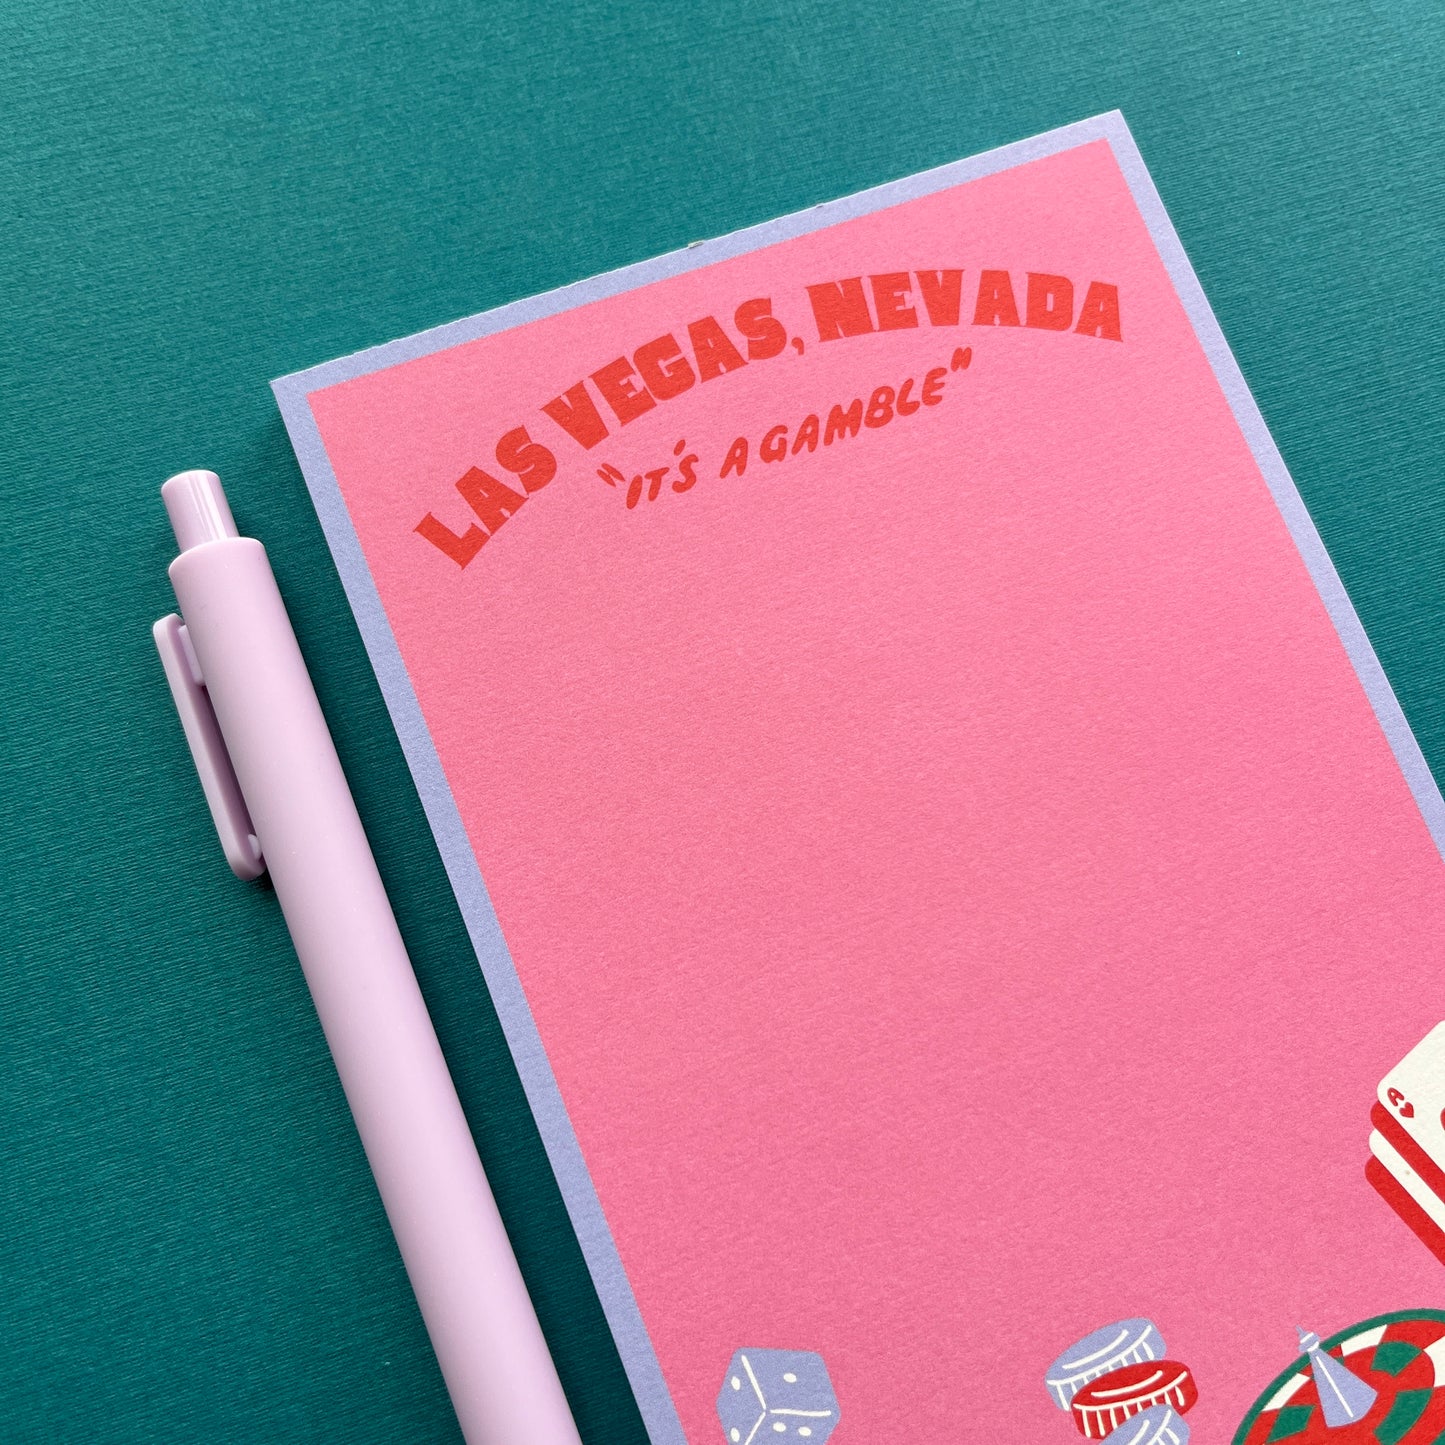 Las Vegas "It's A Gamble" Notepad and Pen